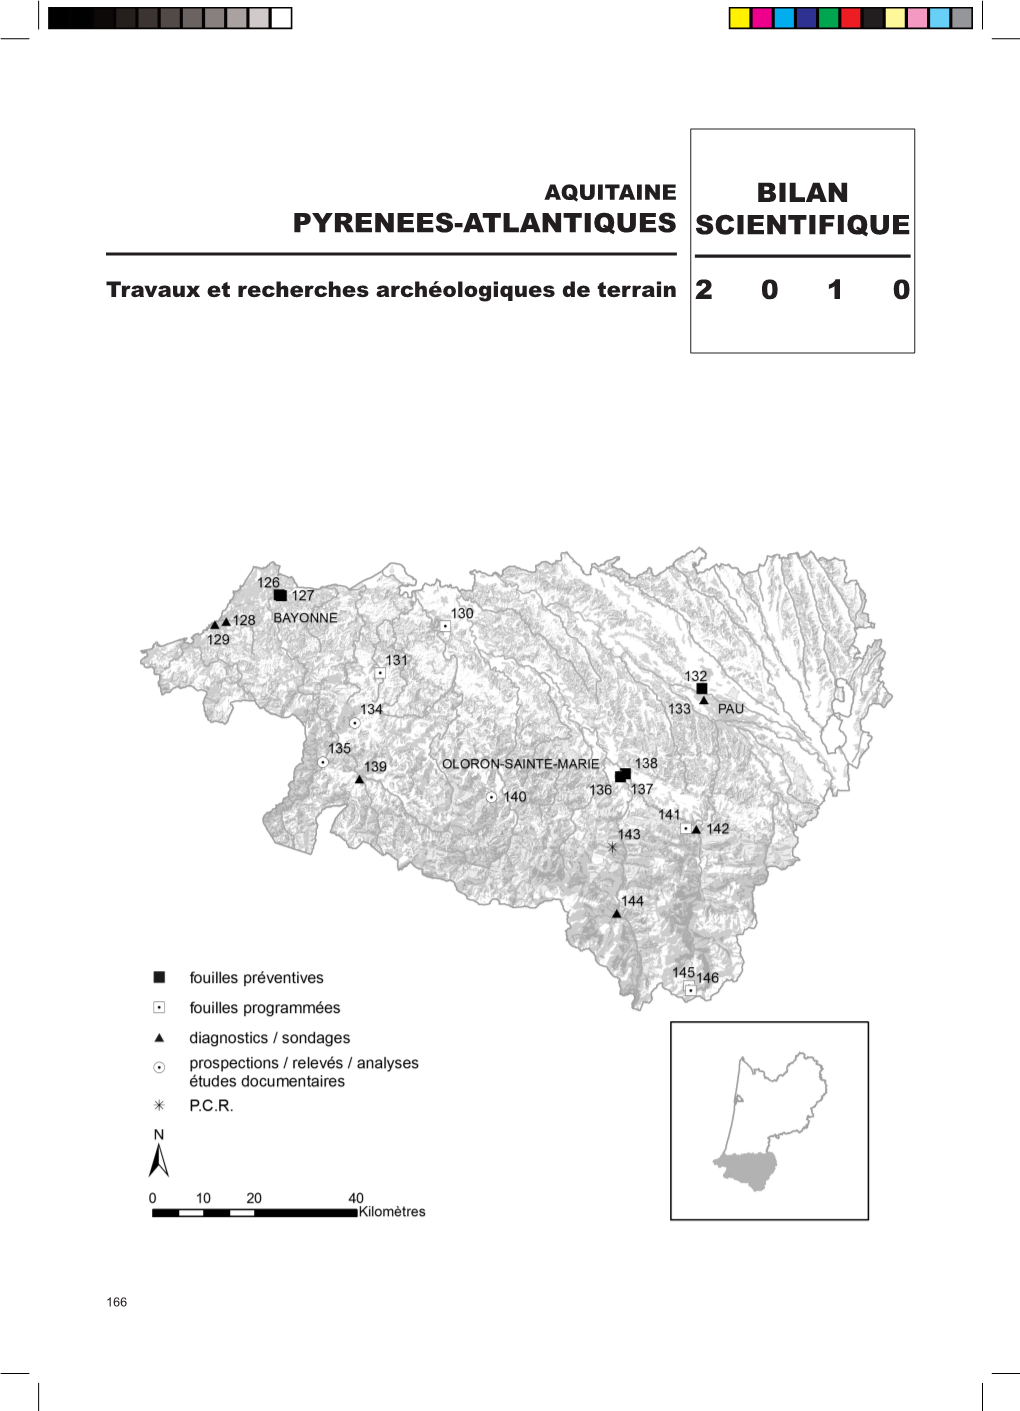 Bilan Scientifique 2 0 1 0 Pyrenees-Atlantiques